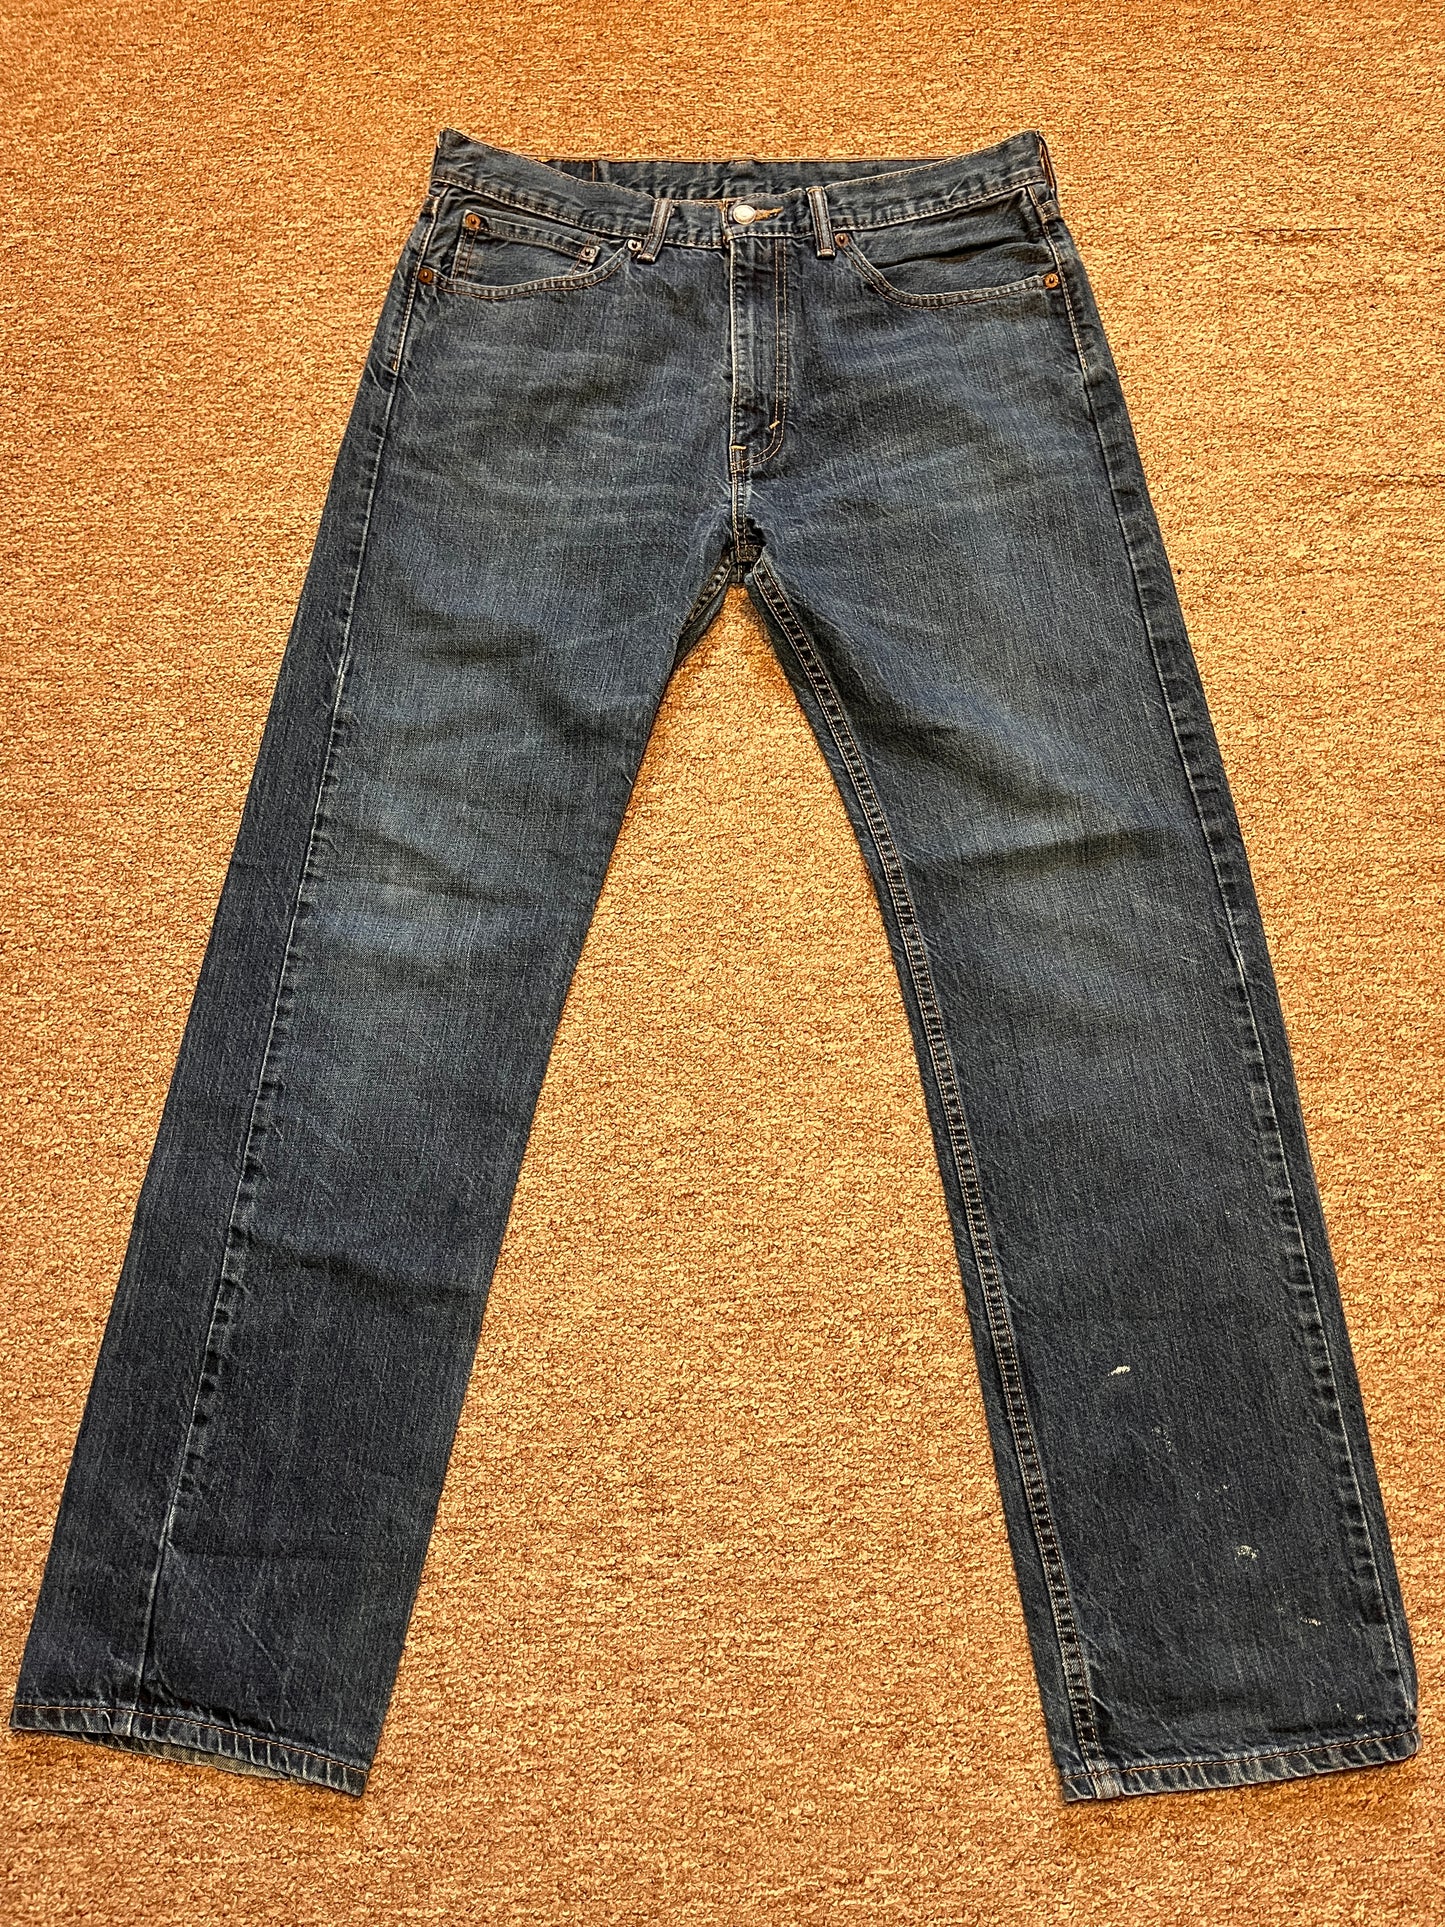 Levi's 505 Jeans Mens 34x34 Regular Straight Blue Denim Wash Cotton Work Pants